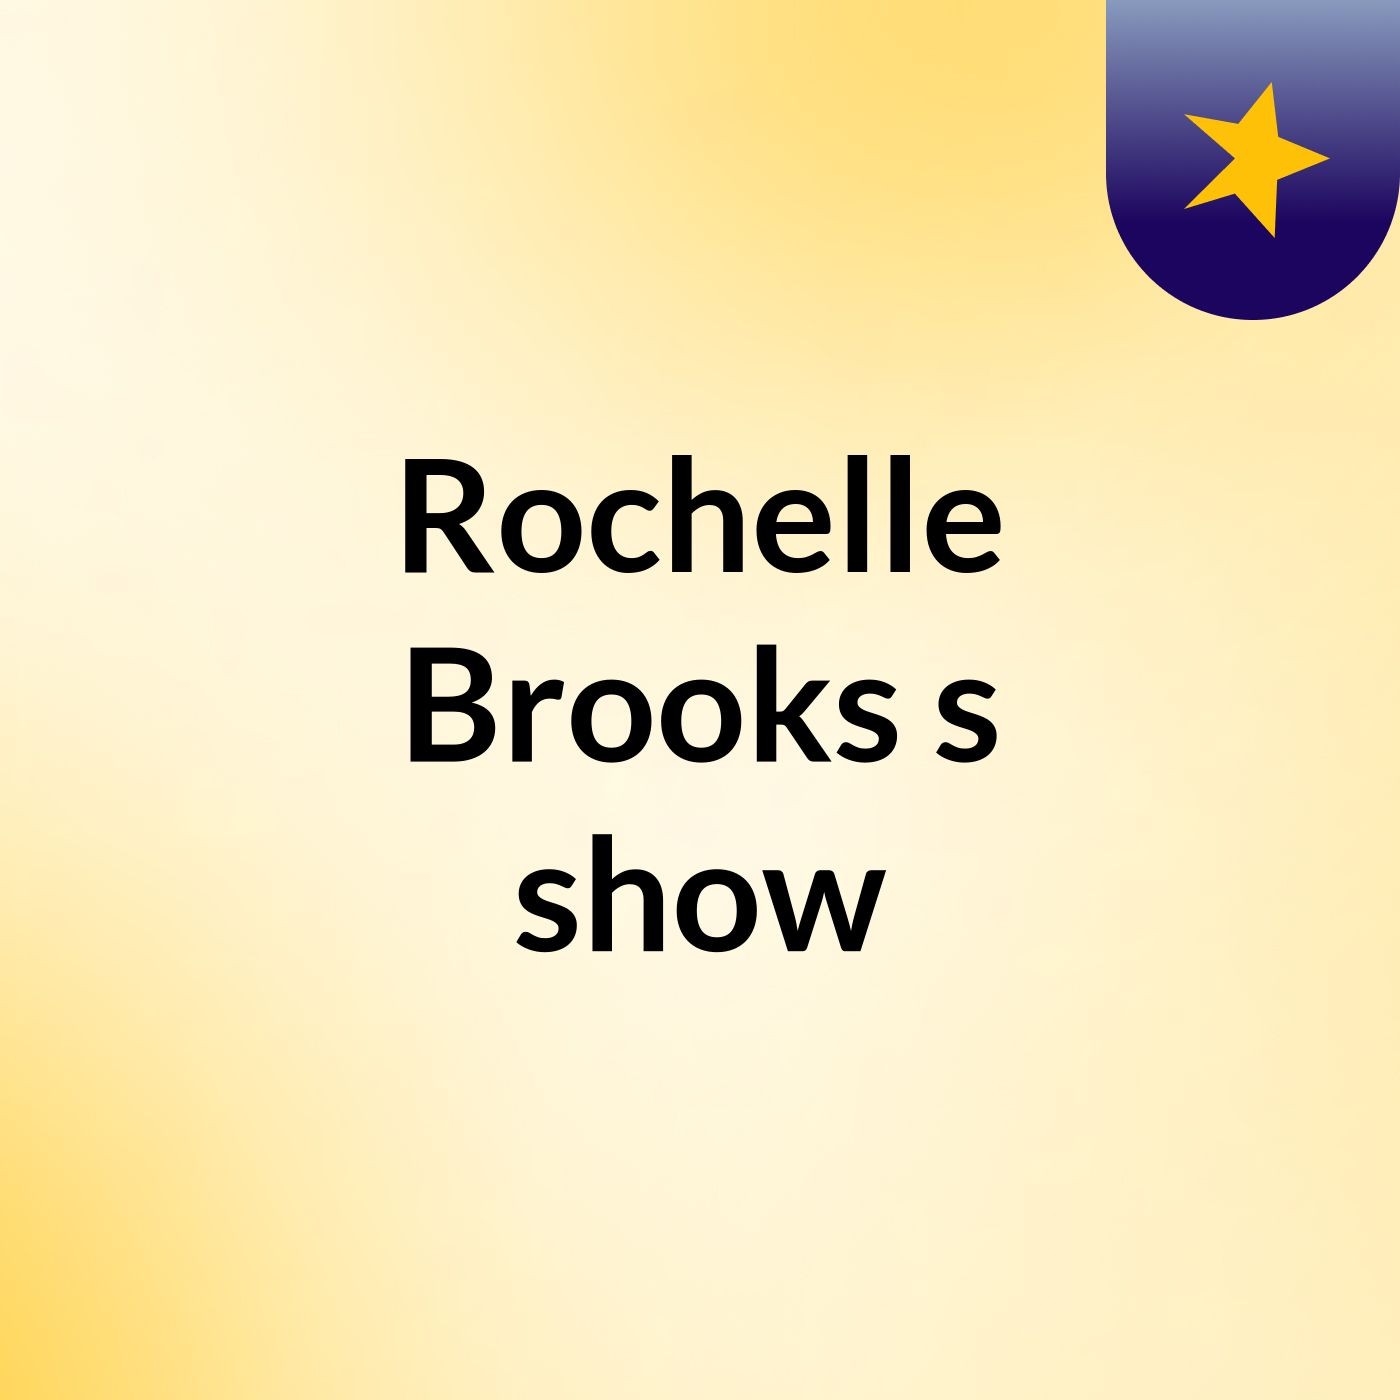 Rochelle Brooks's show